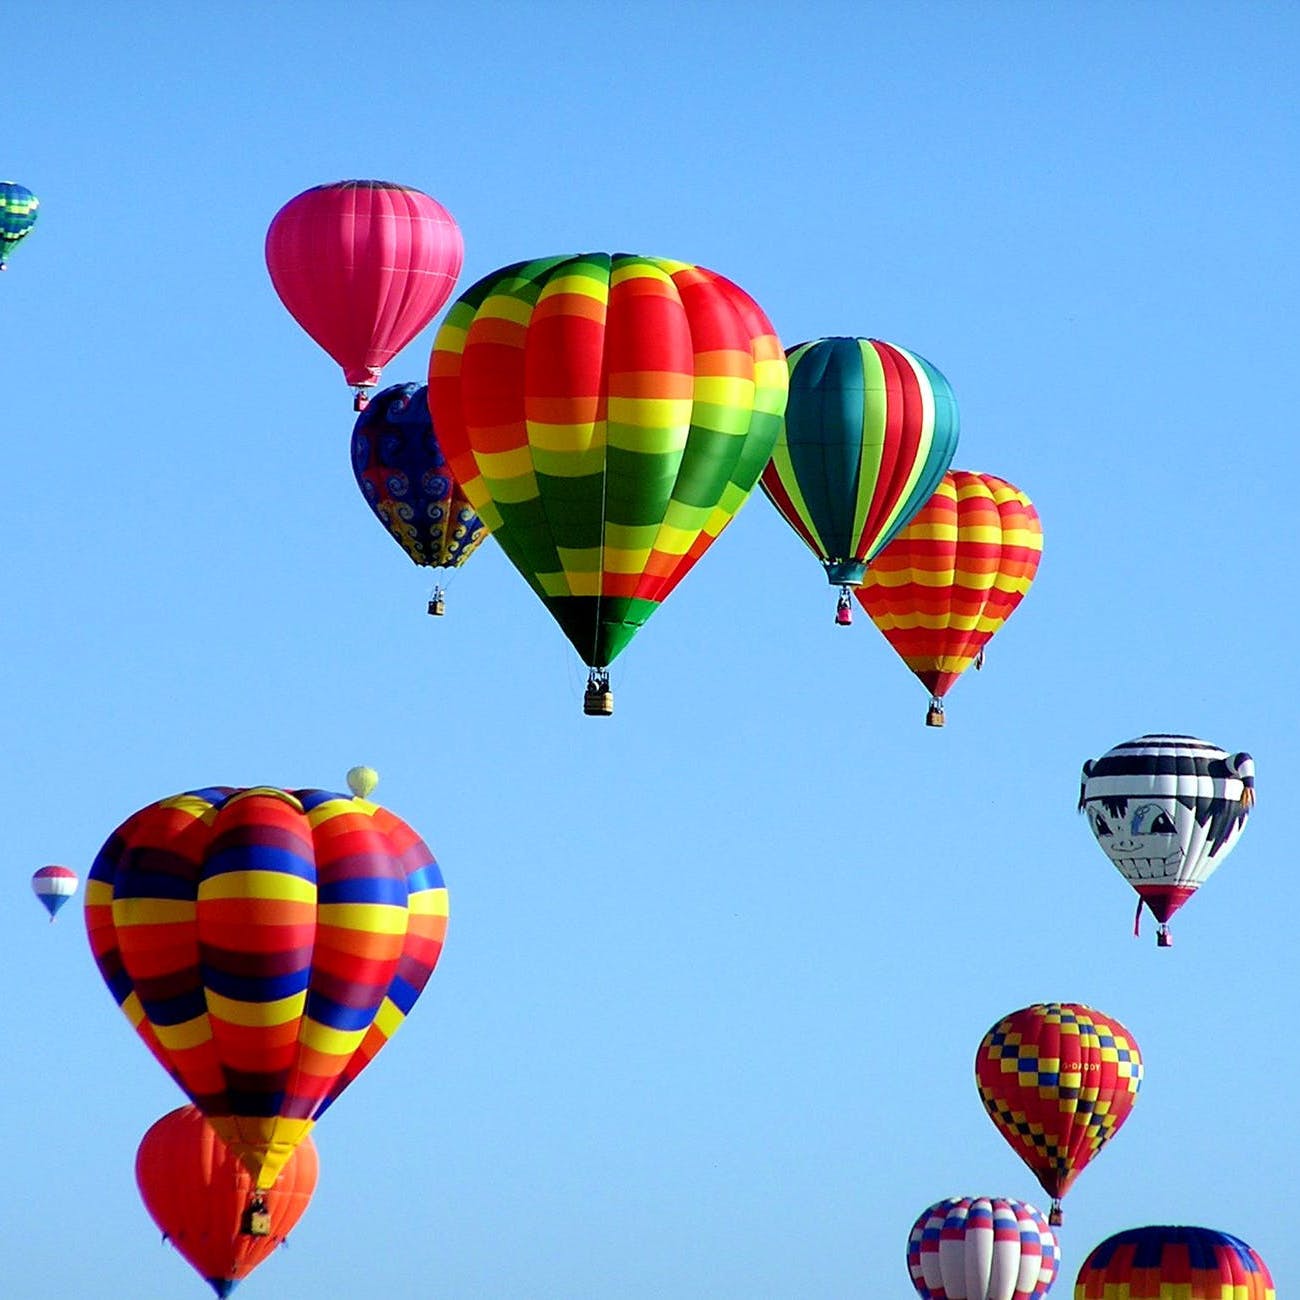 Hot air balloon,Hot air ballooning,Air sports,Balloon,Mode of transport,Daytime,Sky,Vehicle,Air travel,Recreation